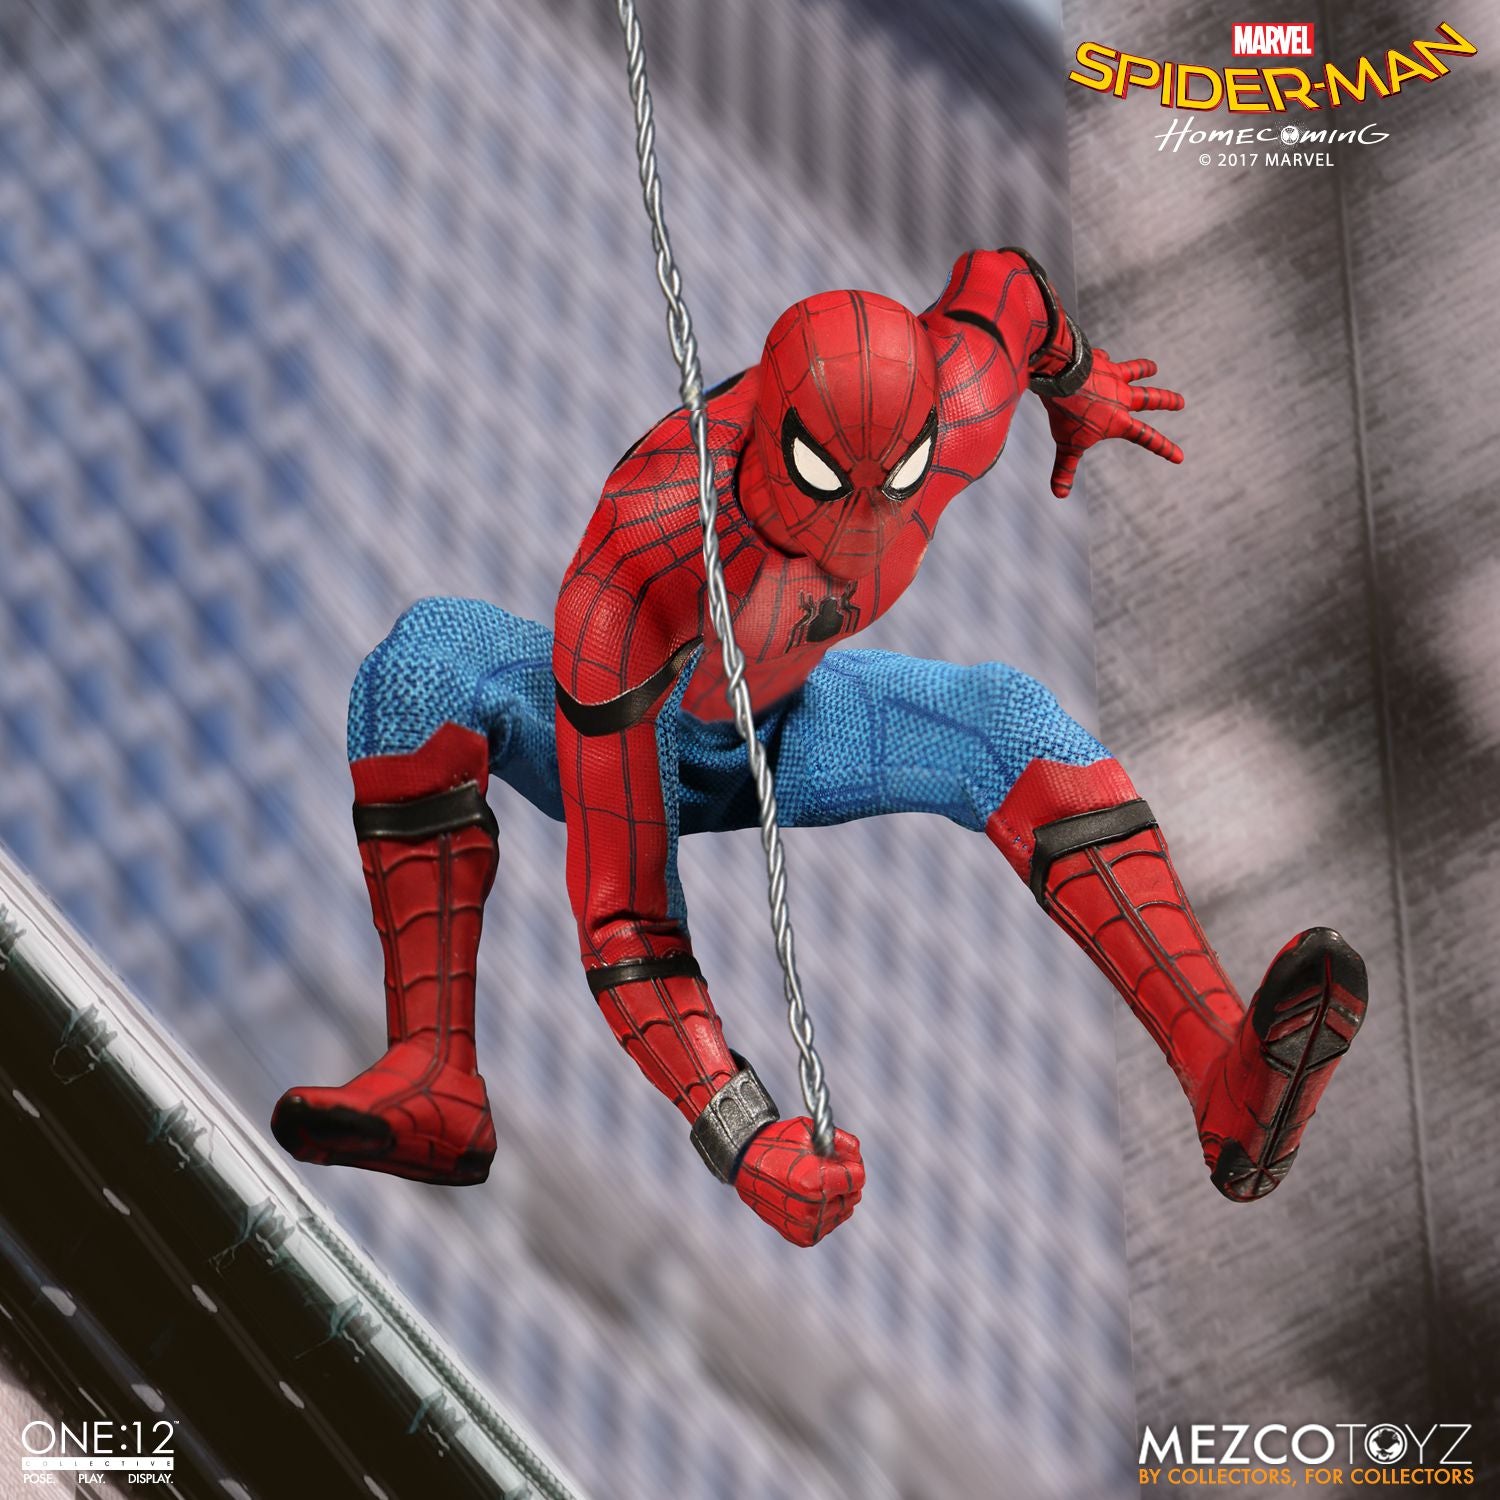 NECA Spider-Man: Homecoming Action Figure